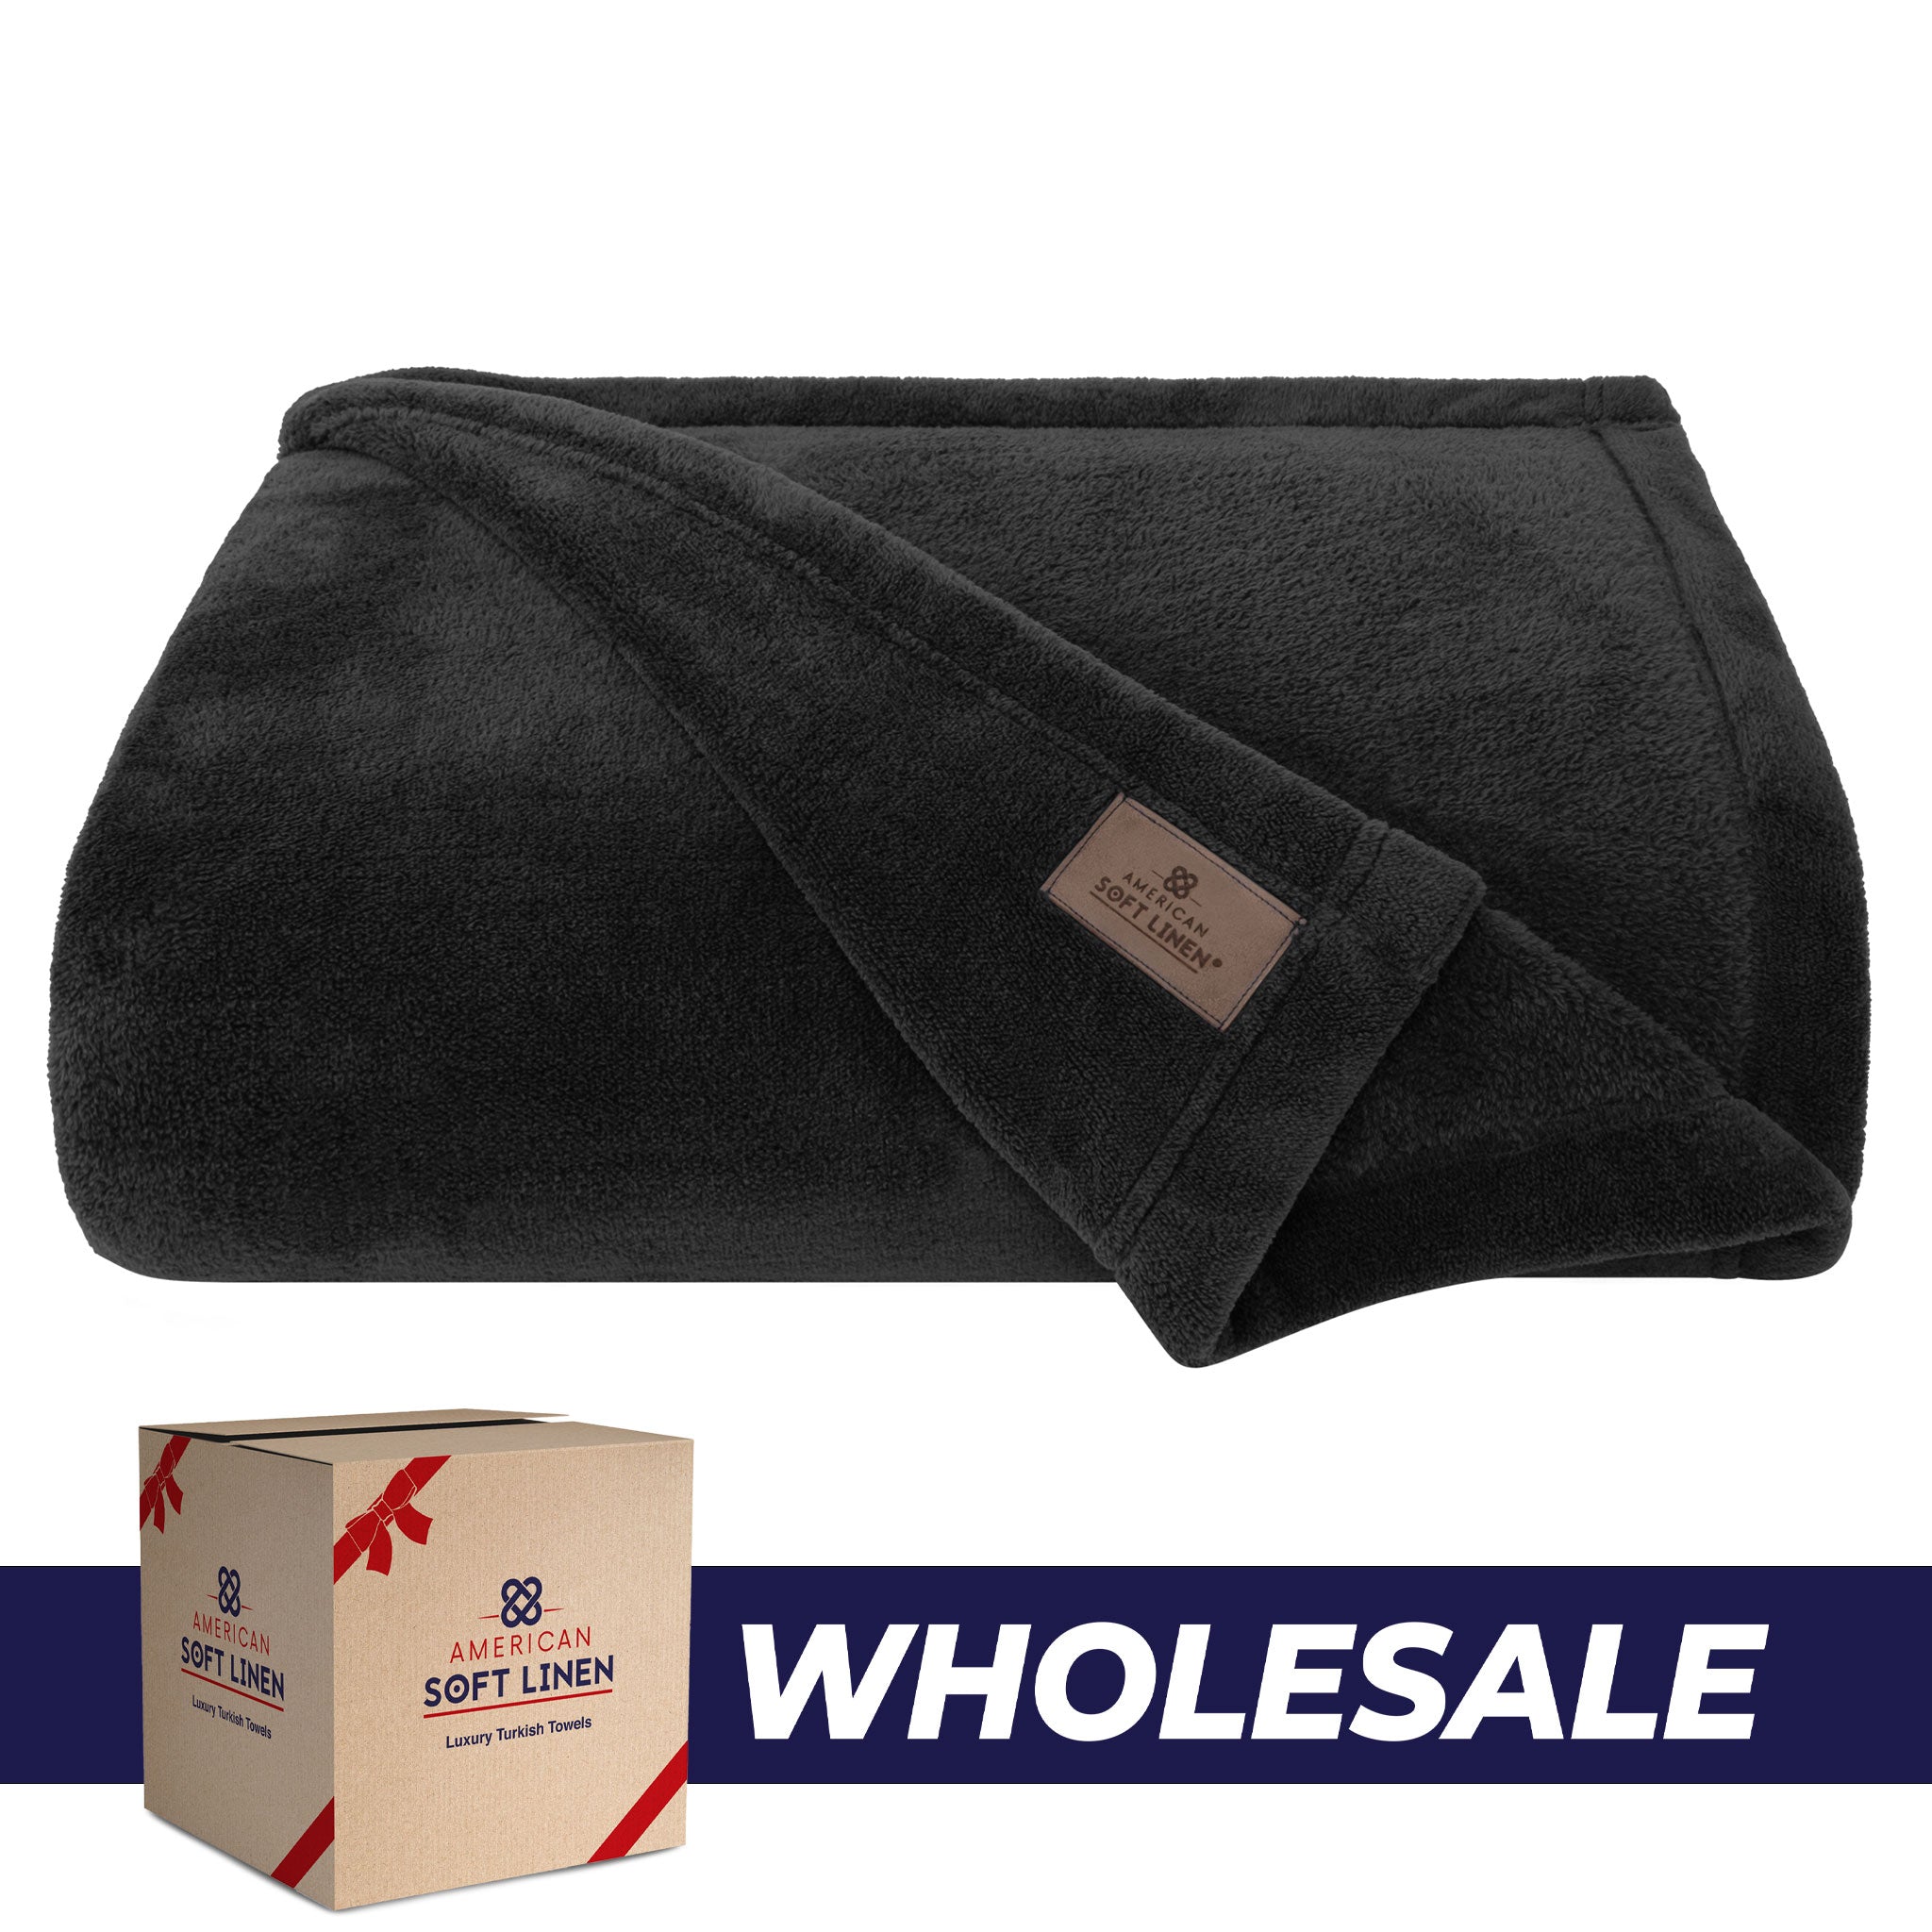 American Soft Linen - Bedding Fleece Blanket - Wholesale - 9 Set Case Pack - Queen Size 85x90 inches - Black - 0